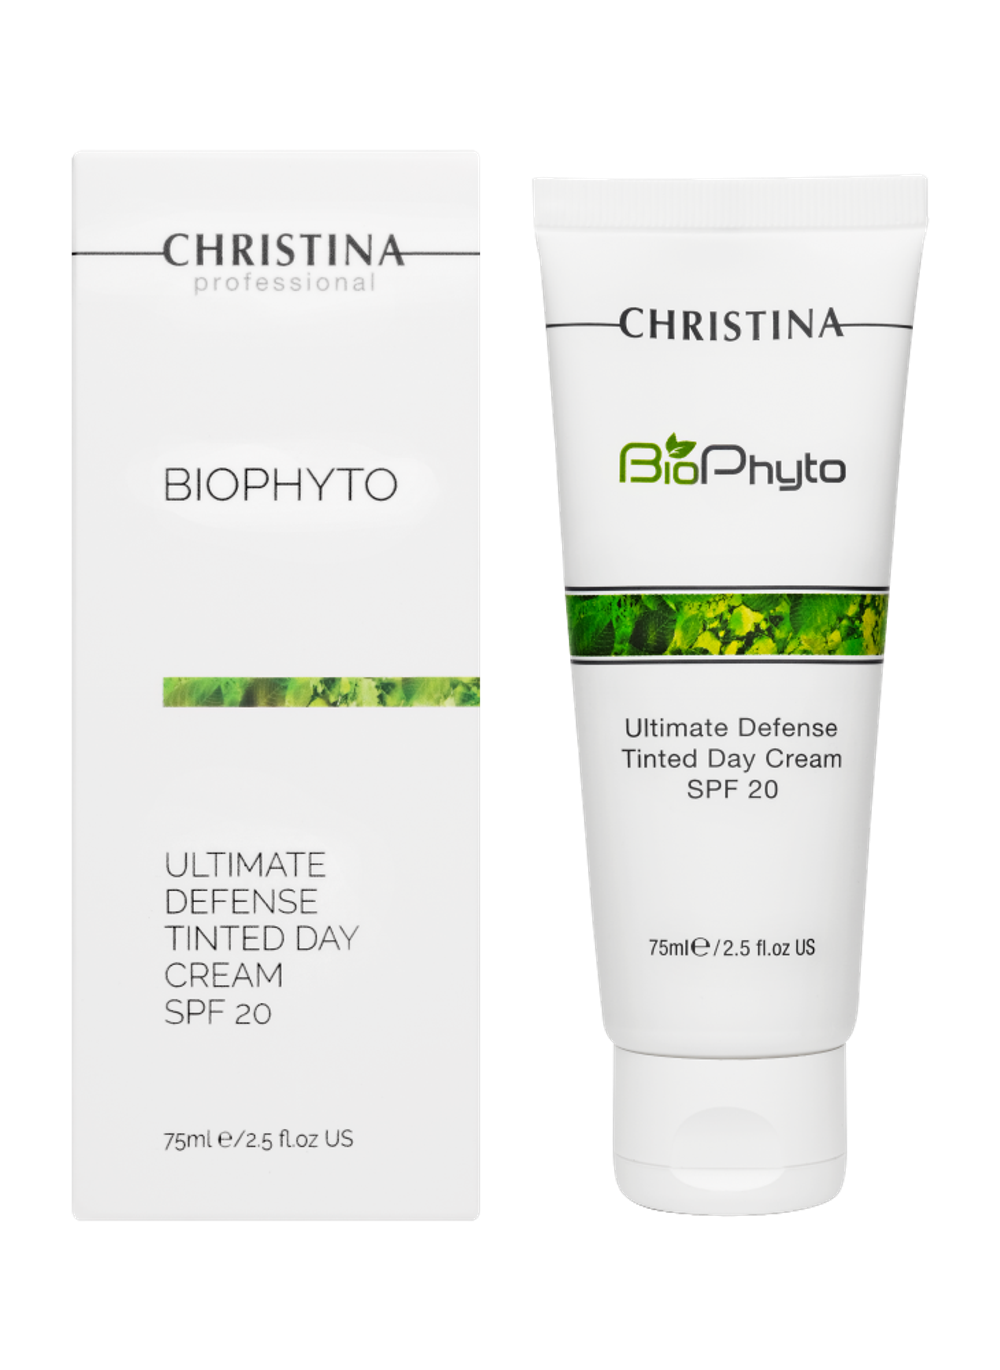 CHRISTINA Bio Phyto Ultimate Defense Tinted Day Cream SPF 20